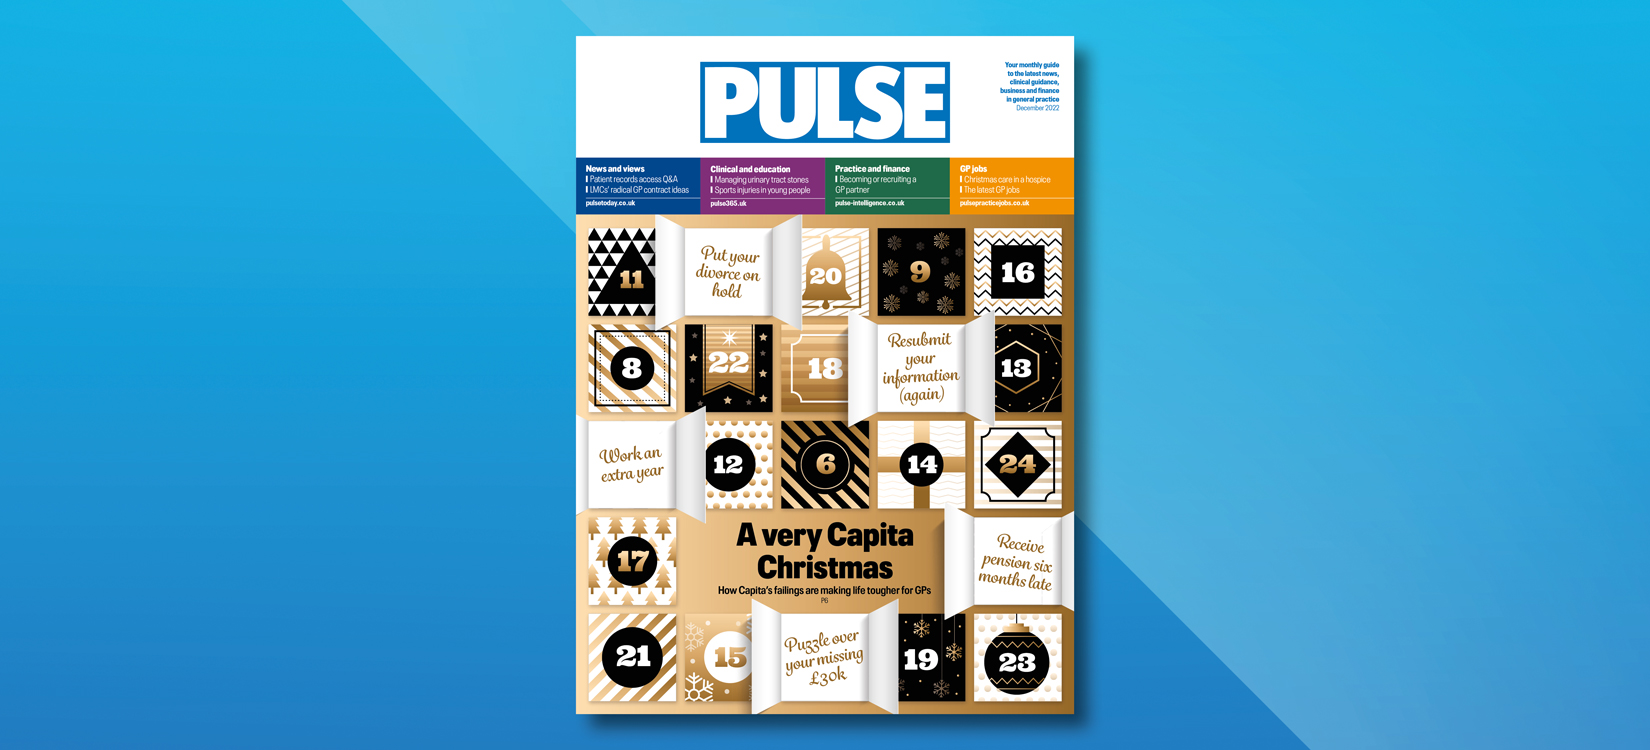 Pulse: A very Capita Christmas